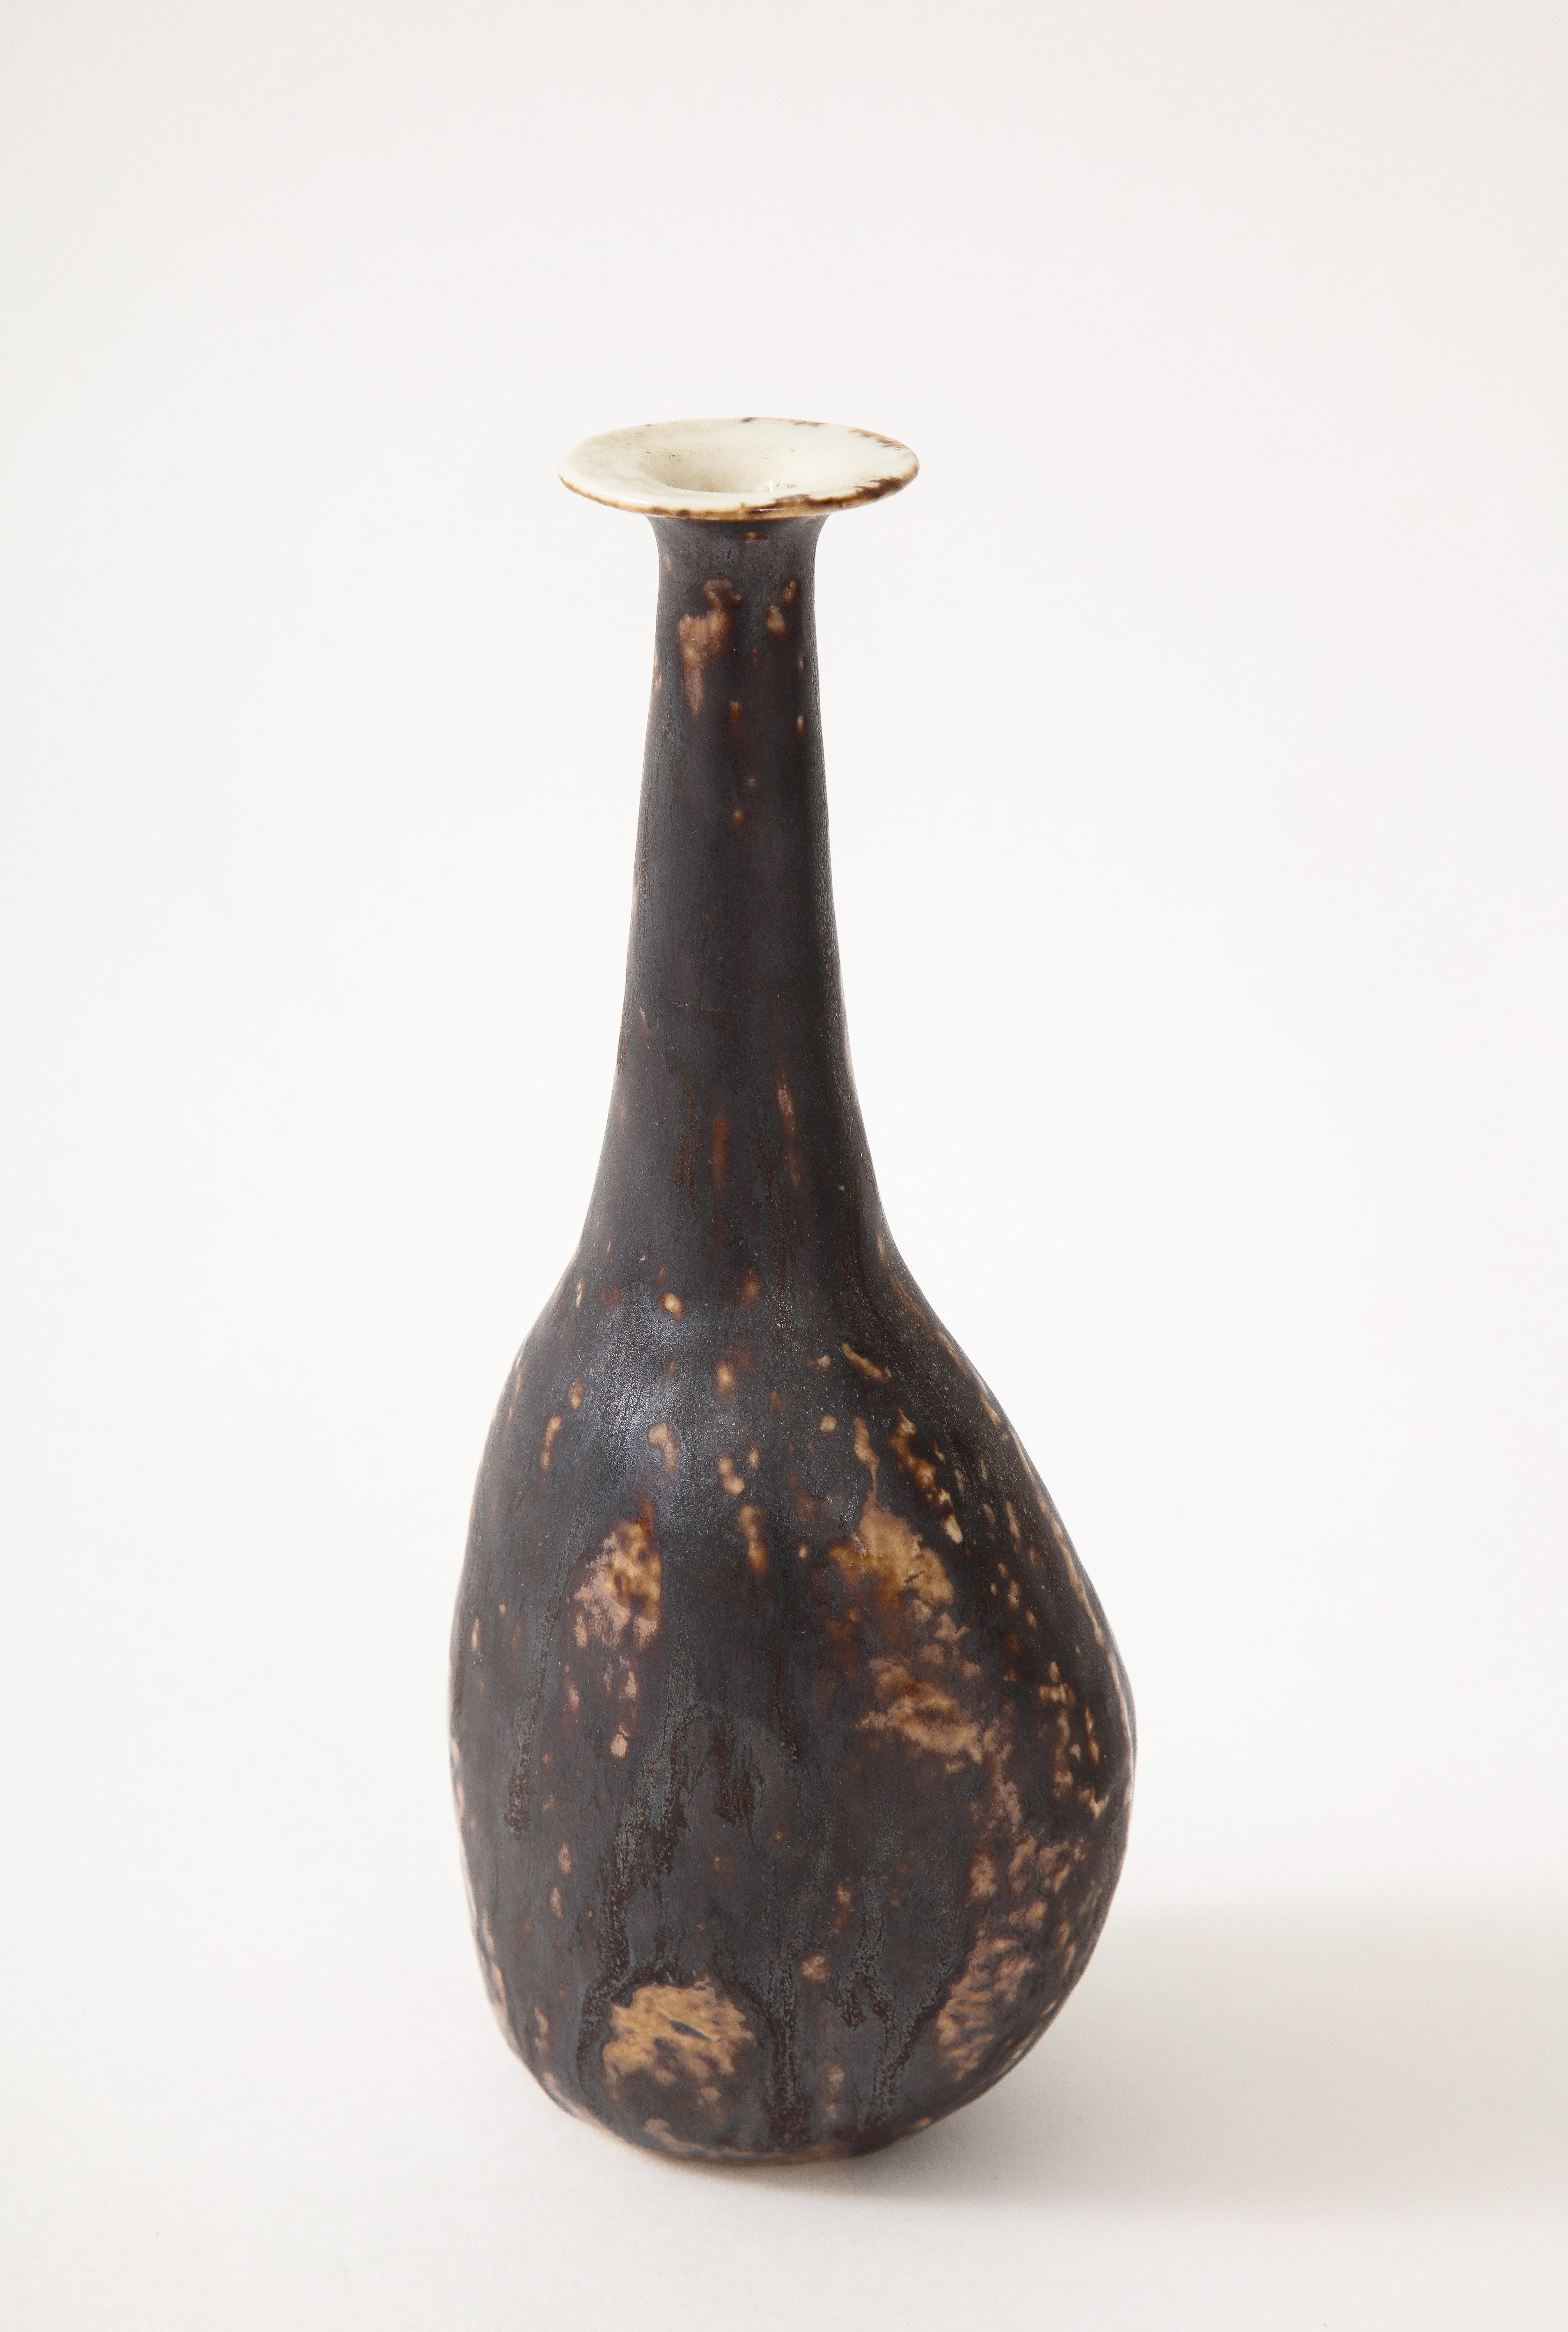 Bruno Gambone Set of Three Small Ceramic or Stoneware Vases, Italy, 1970s For Sale 4